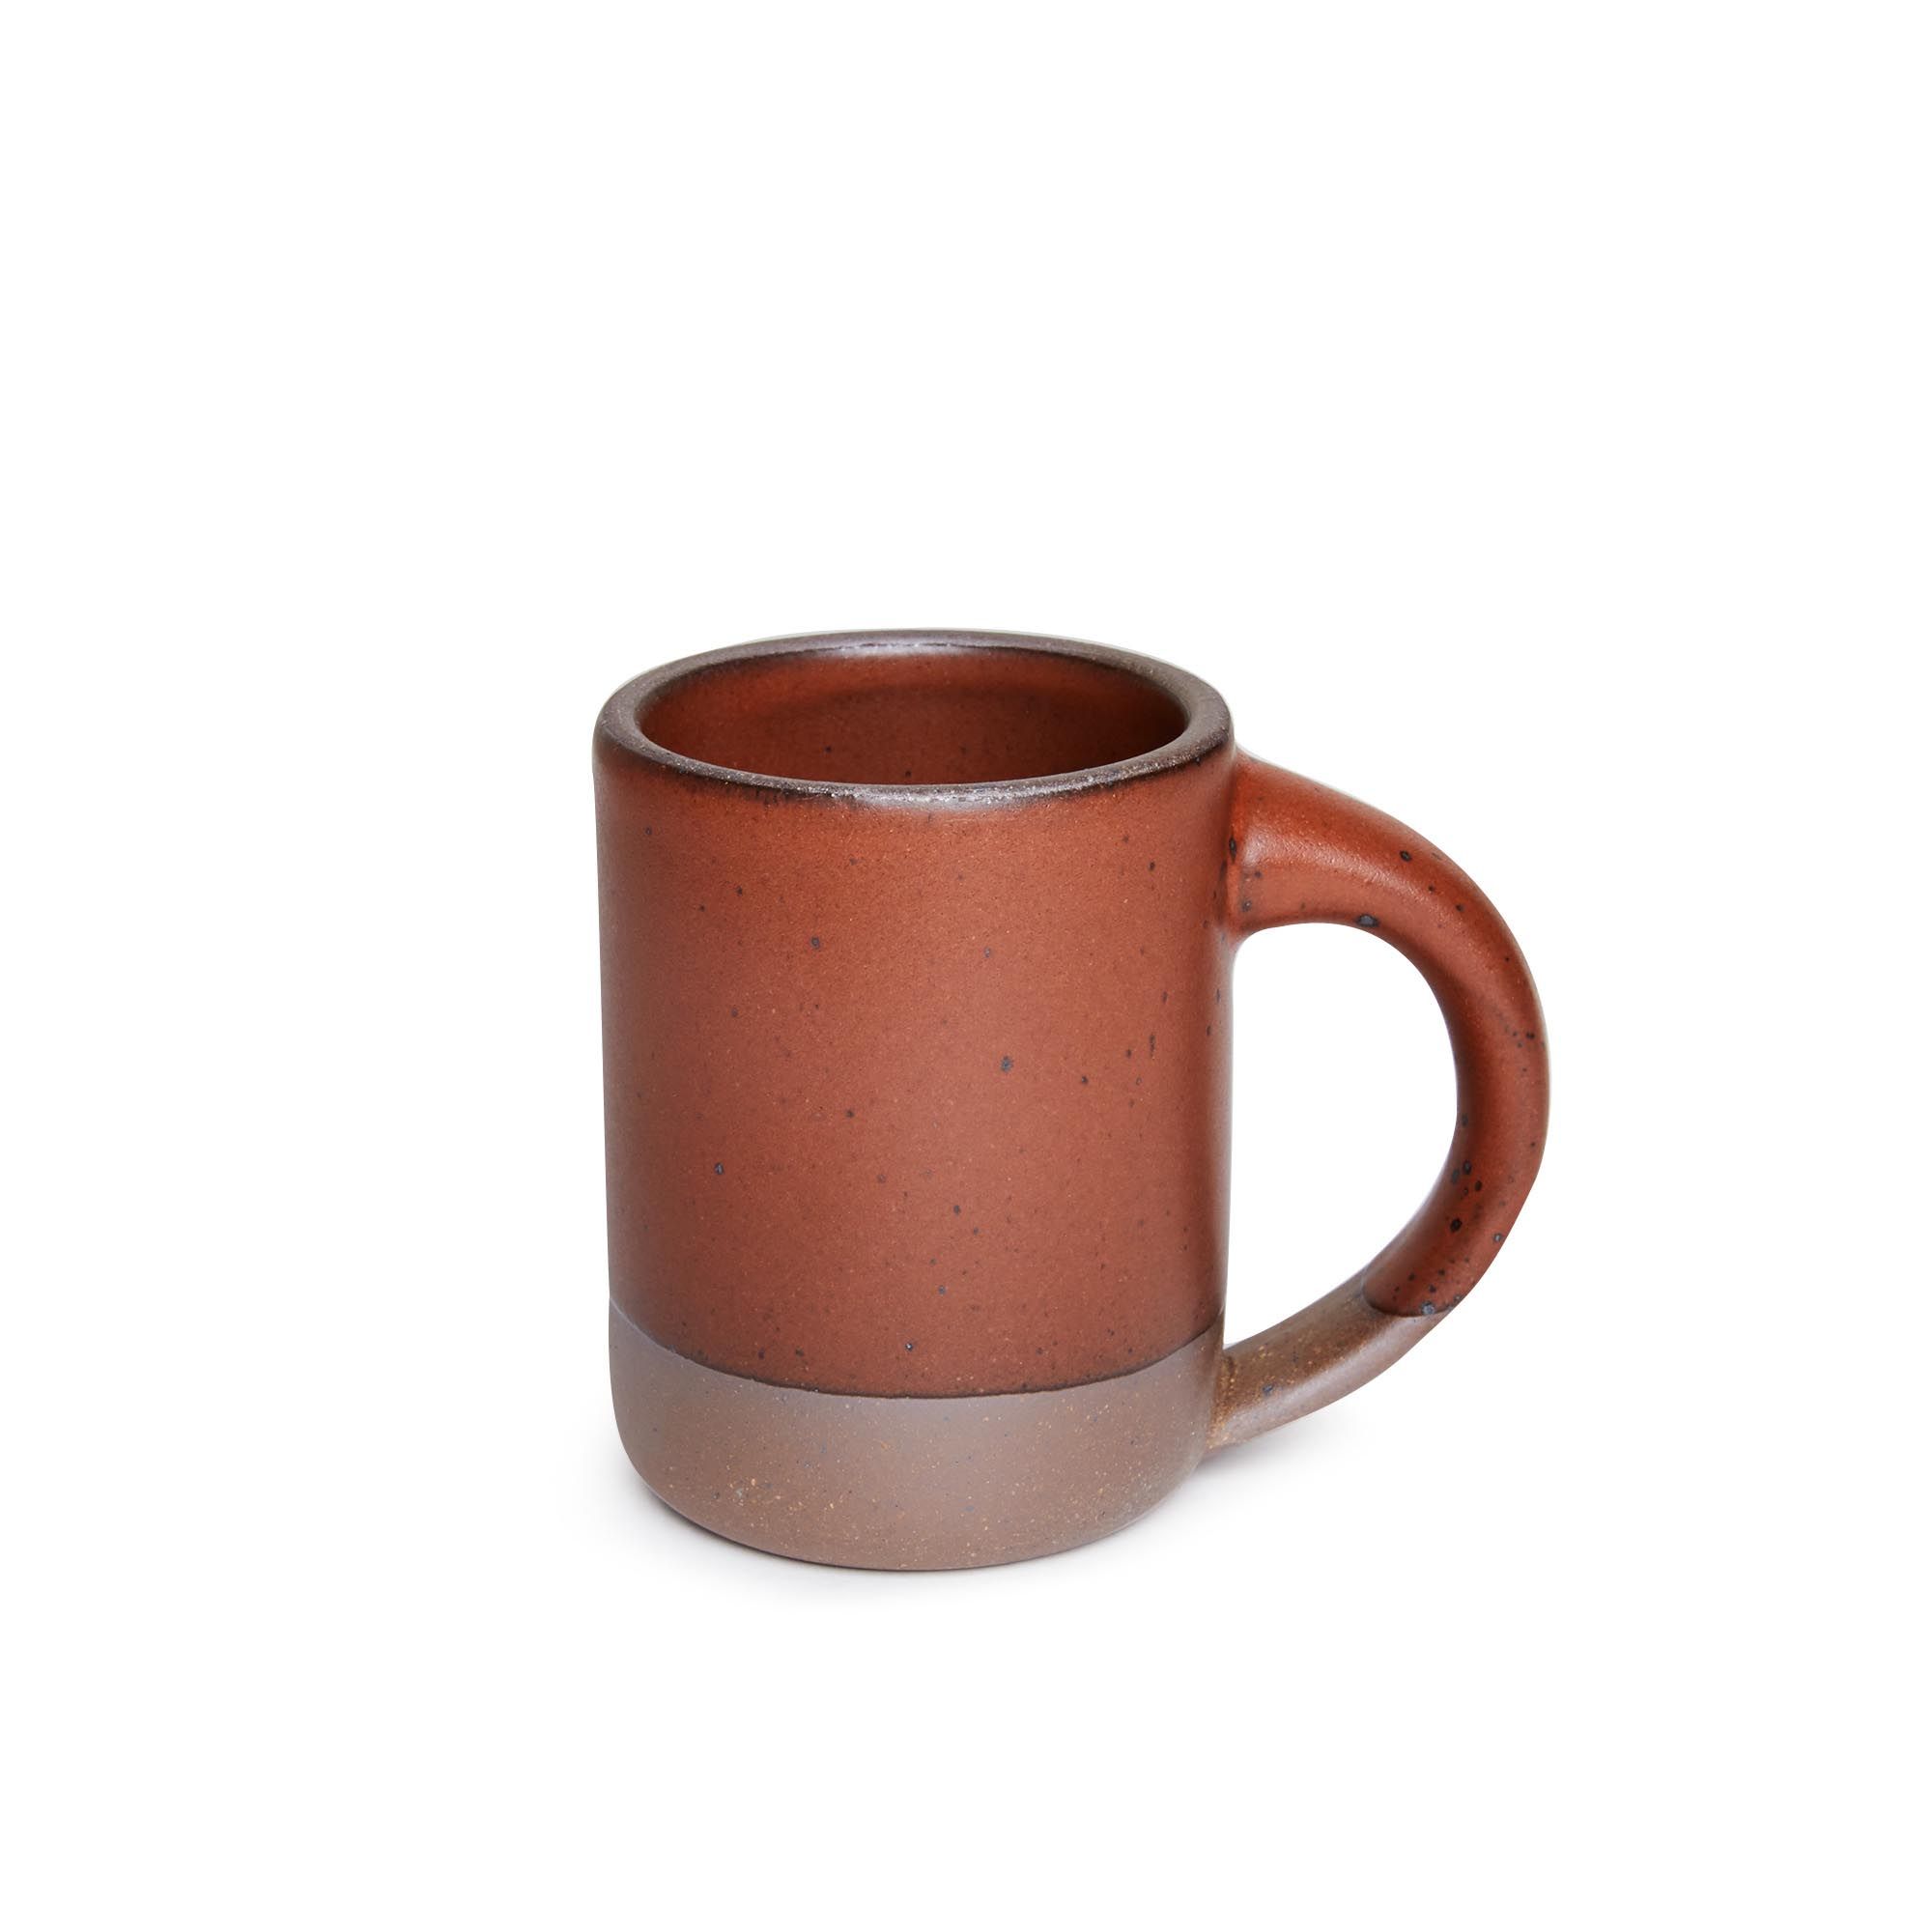 The Mug in Amaro